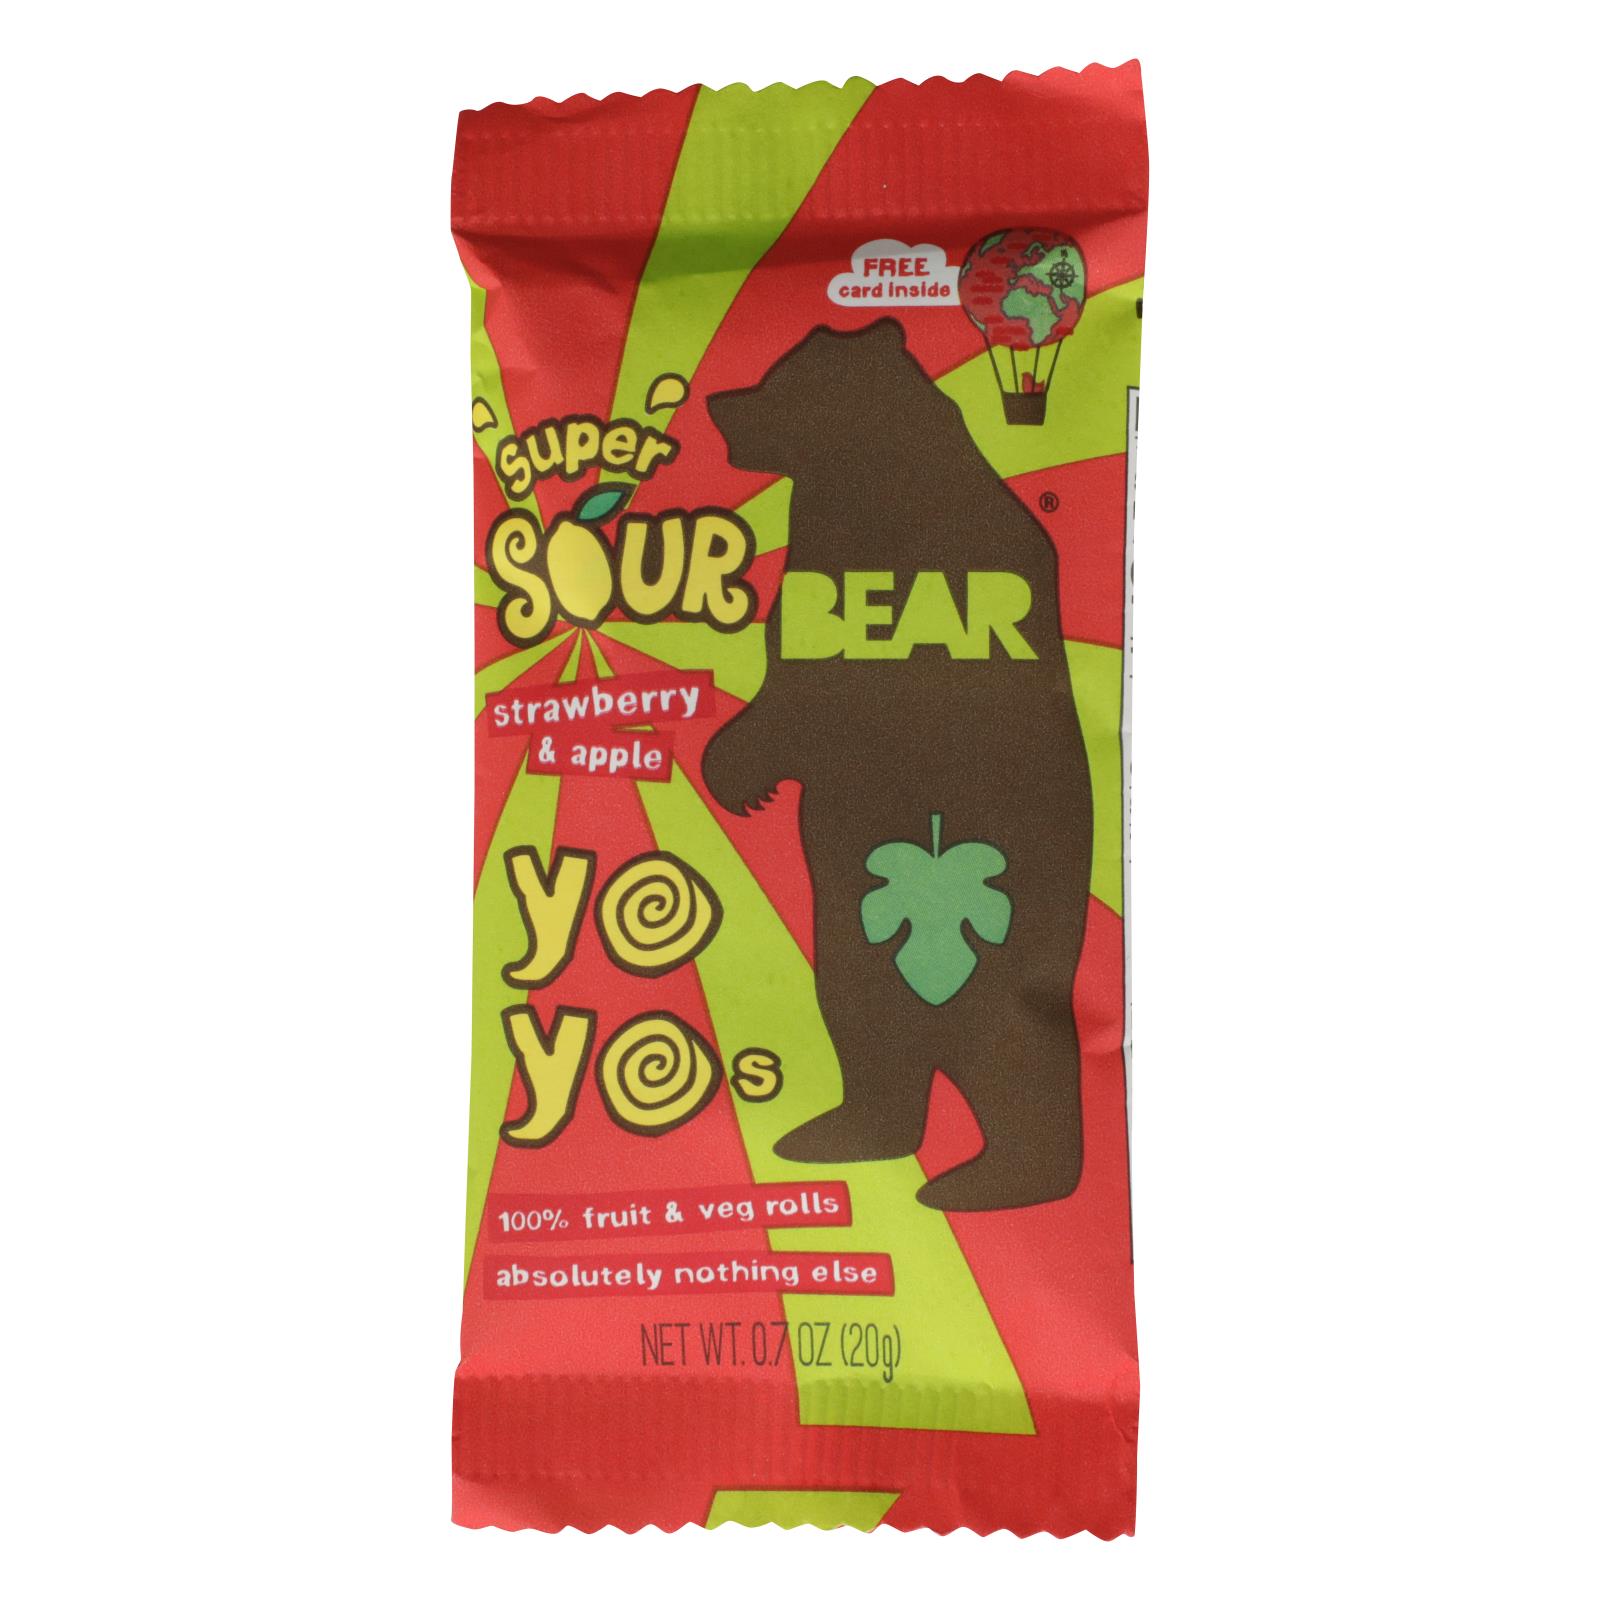 Bear - Real Fruit Yoyo Straw Apple - 6개 묶음상품 - 3.5 OZ